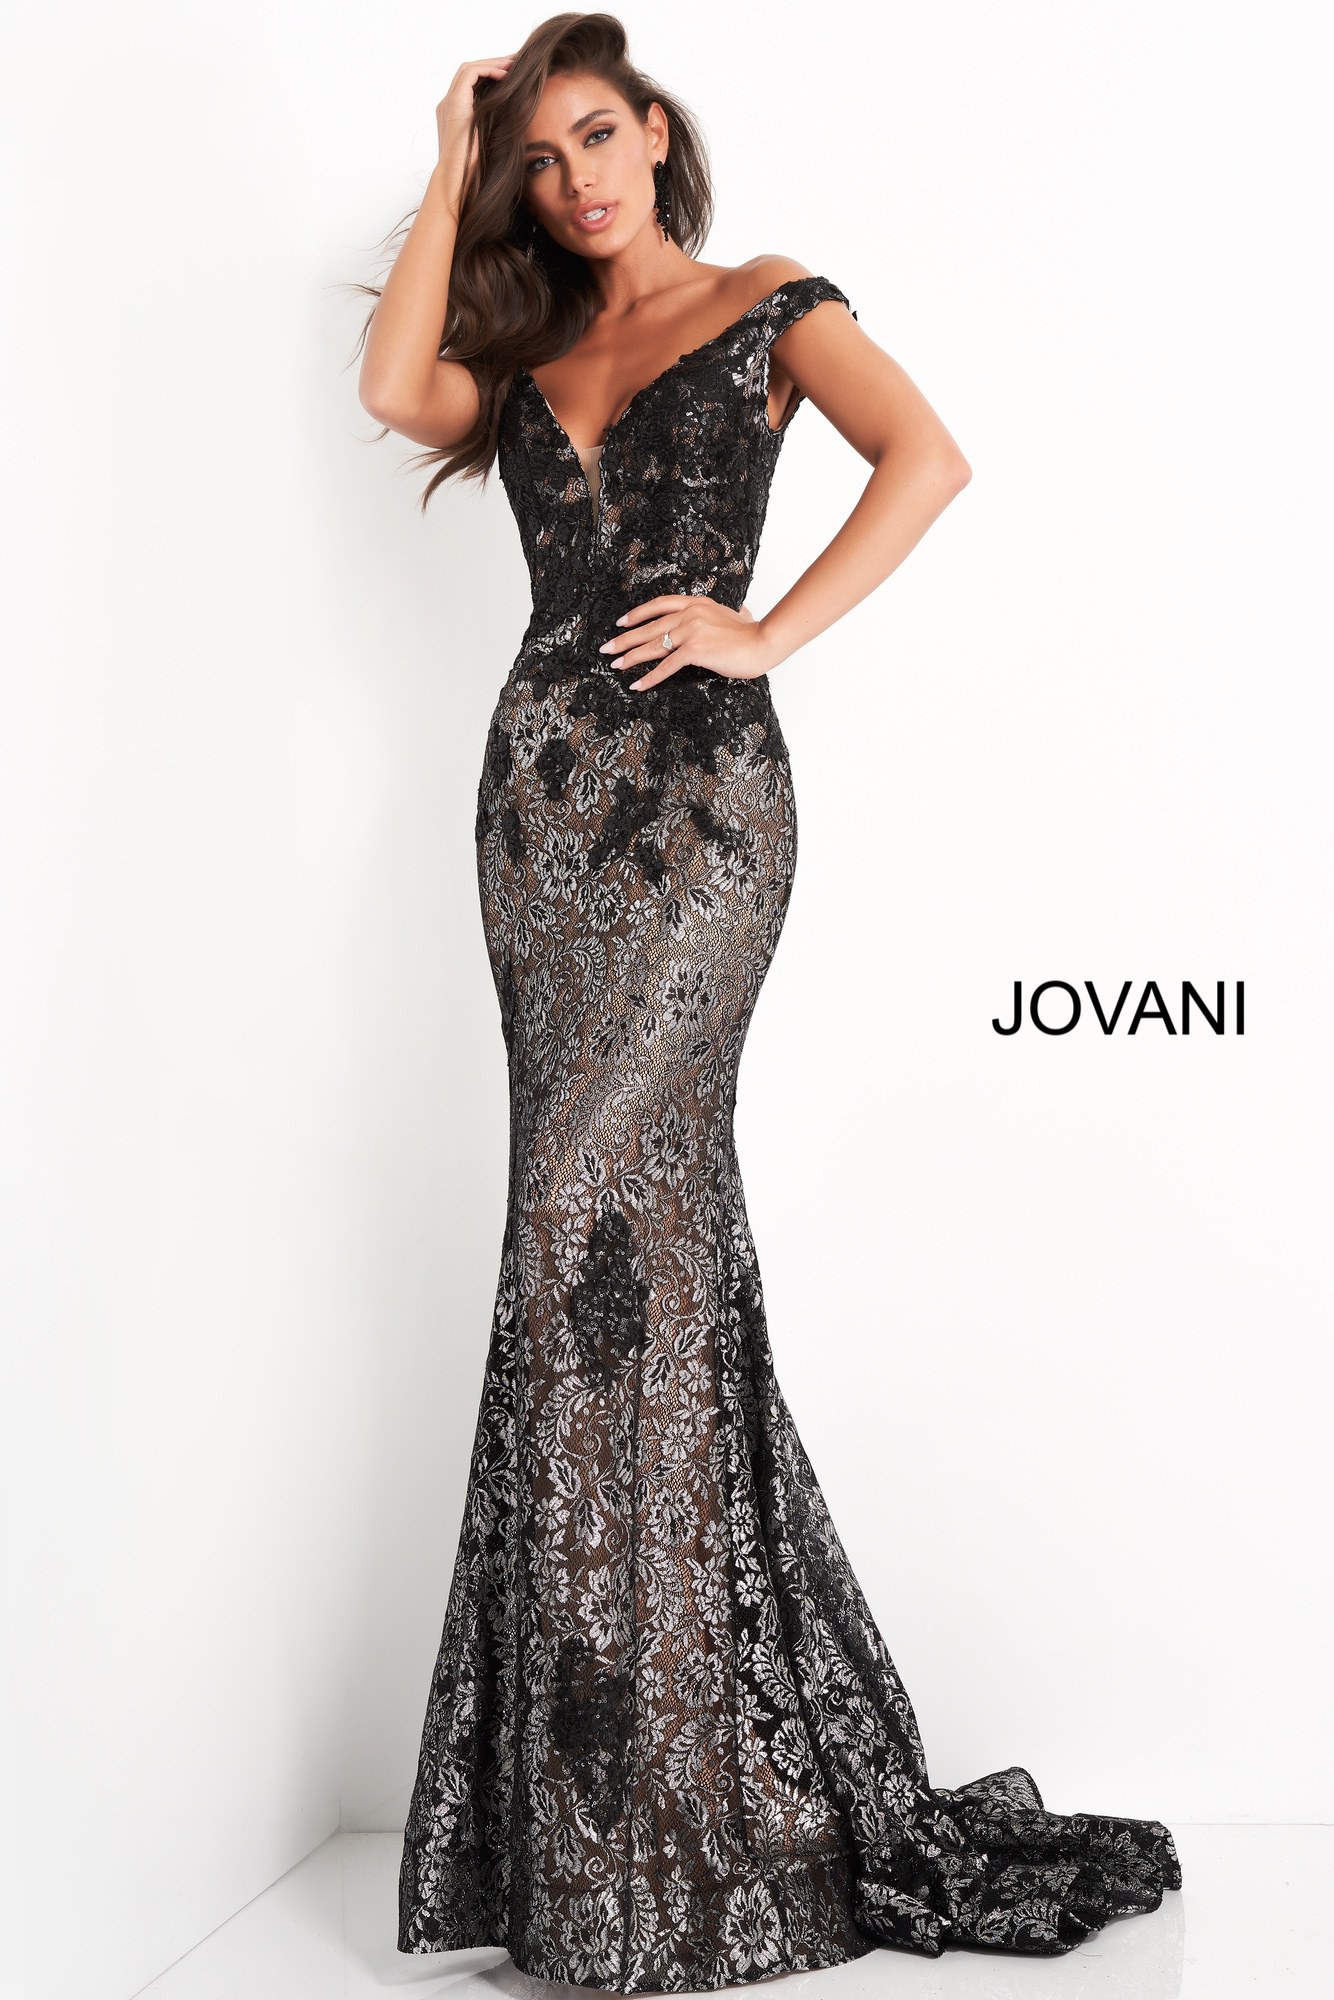 Jovani 06437 | Black Metallic Lace Embroidered Prom Dress